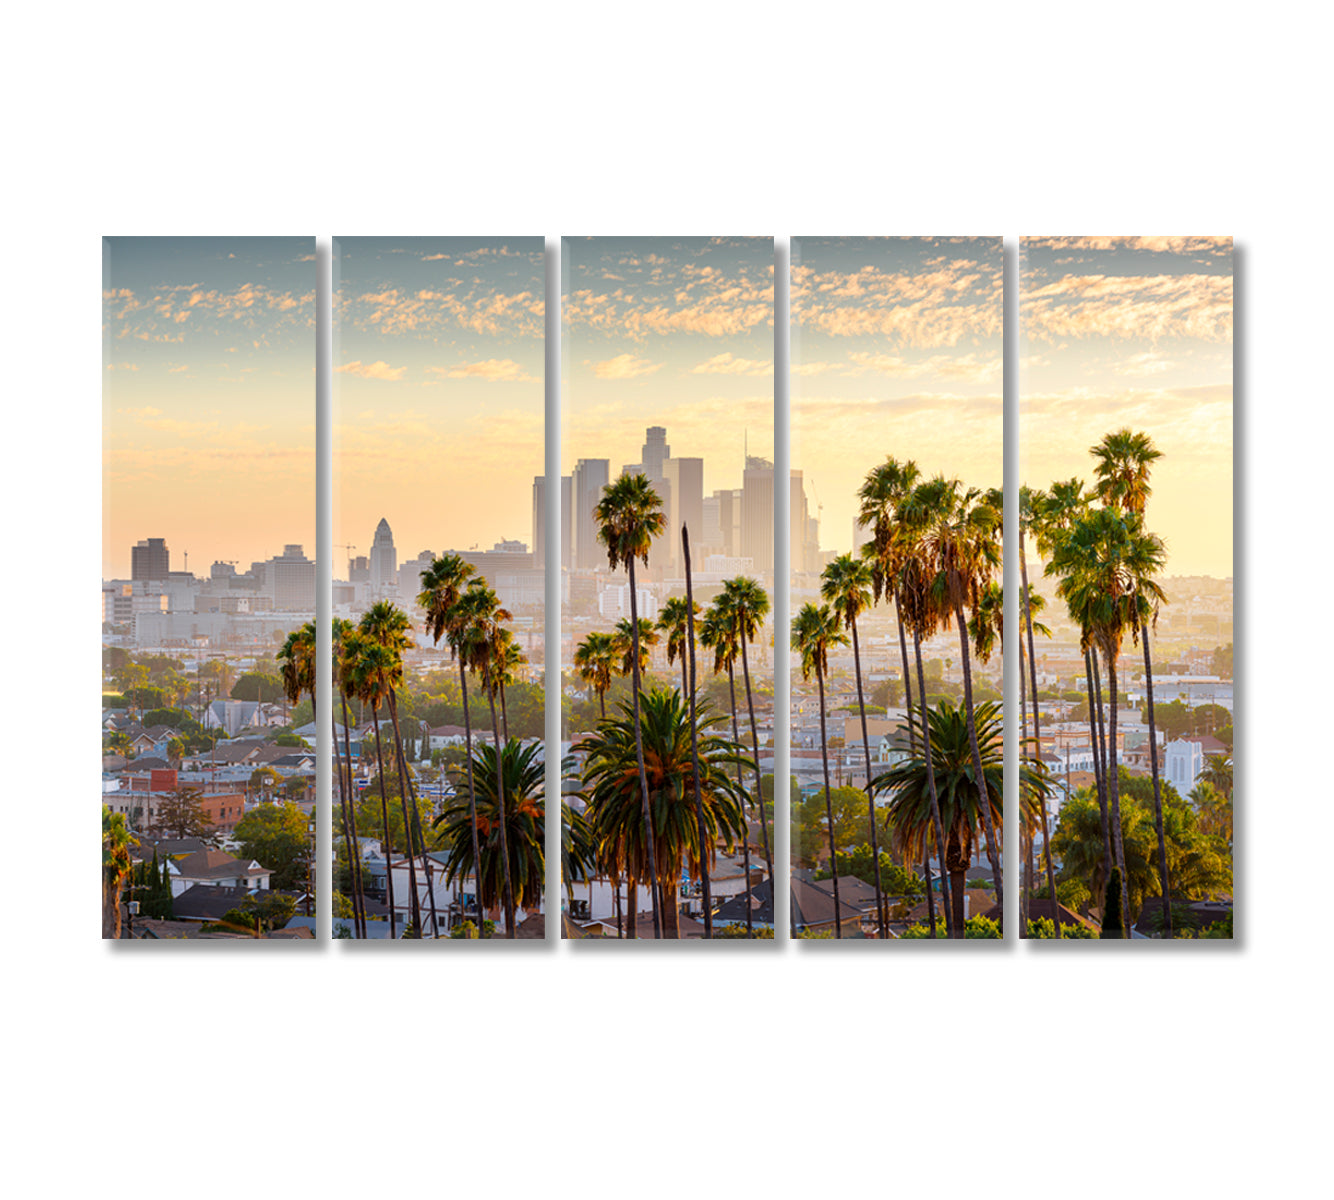 Downtown Los Angeles Skyline at Sunset Canvas Print-Canvas Print-CetArt-5 Panels-36x24 inches-CetArt